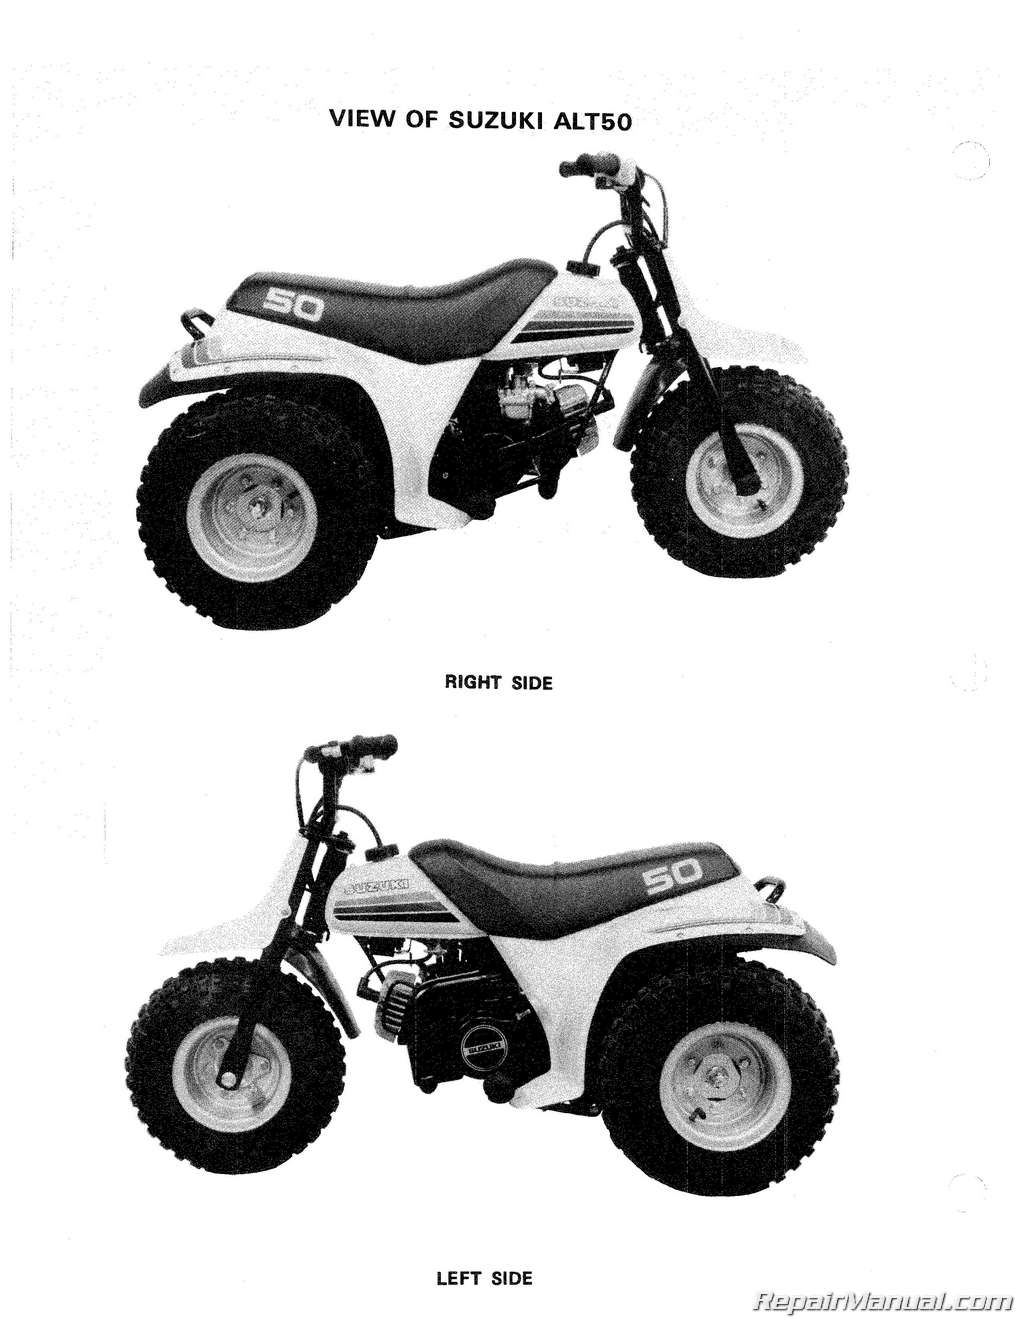 Suzuki ALT50 Manual Trailbuddy 1983-1984